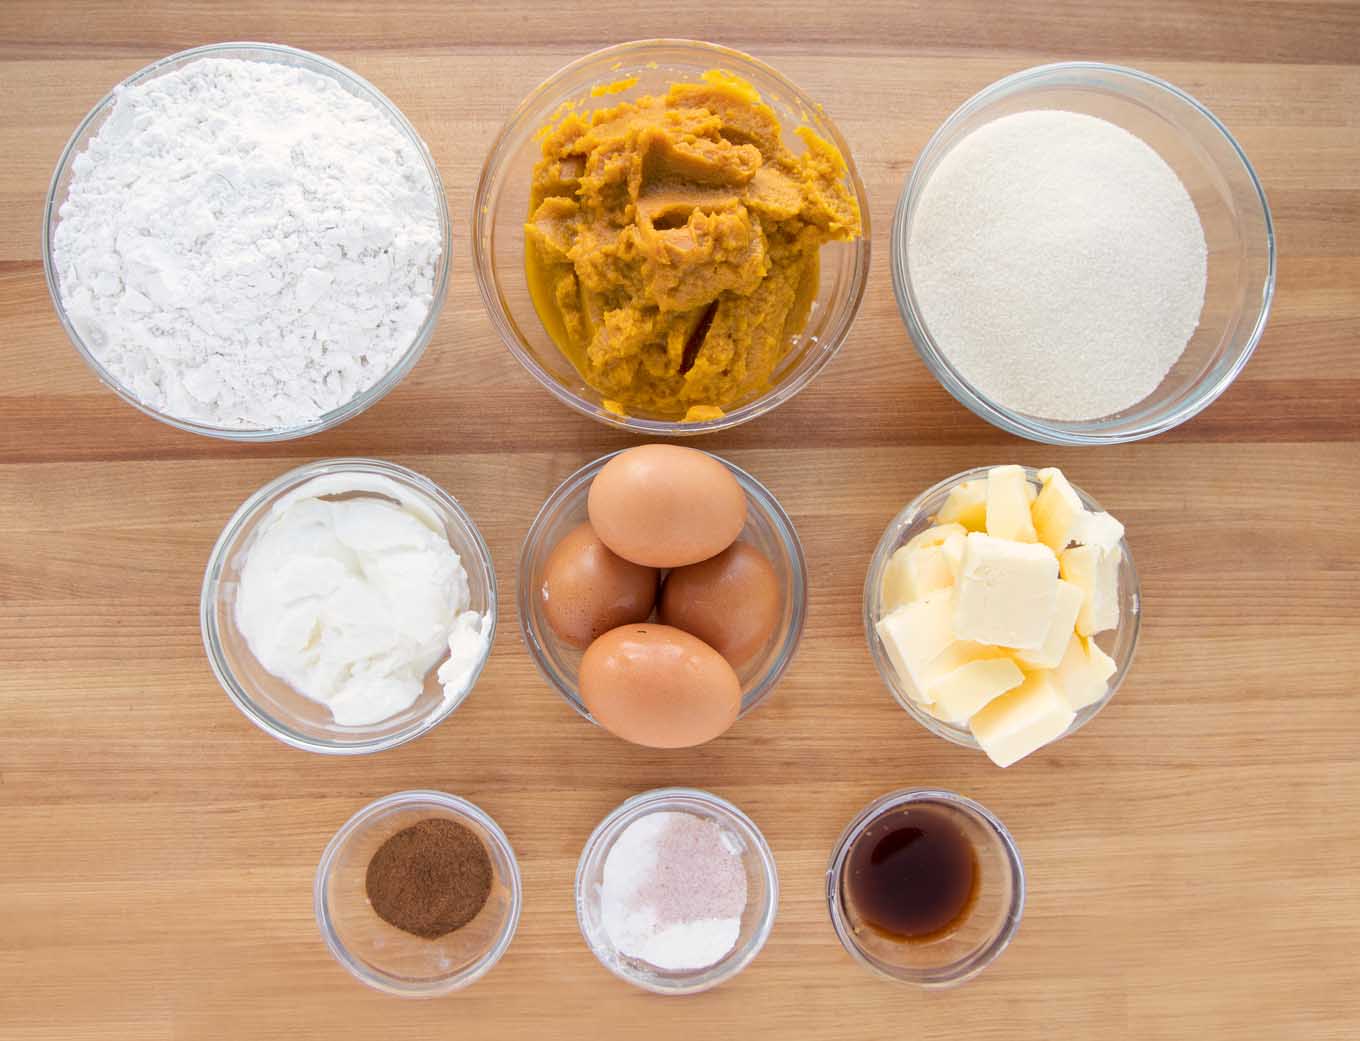 ingredients to make pumpkin crunch cake in glass bowls